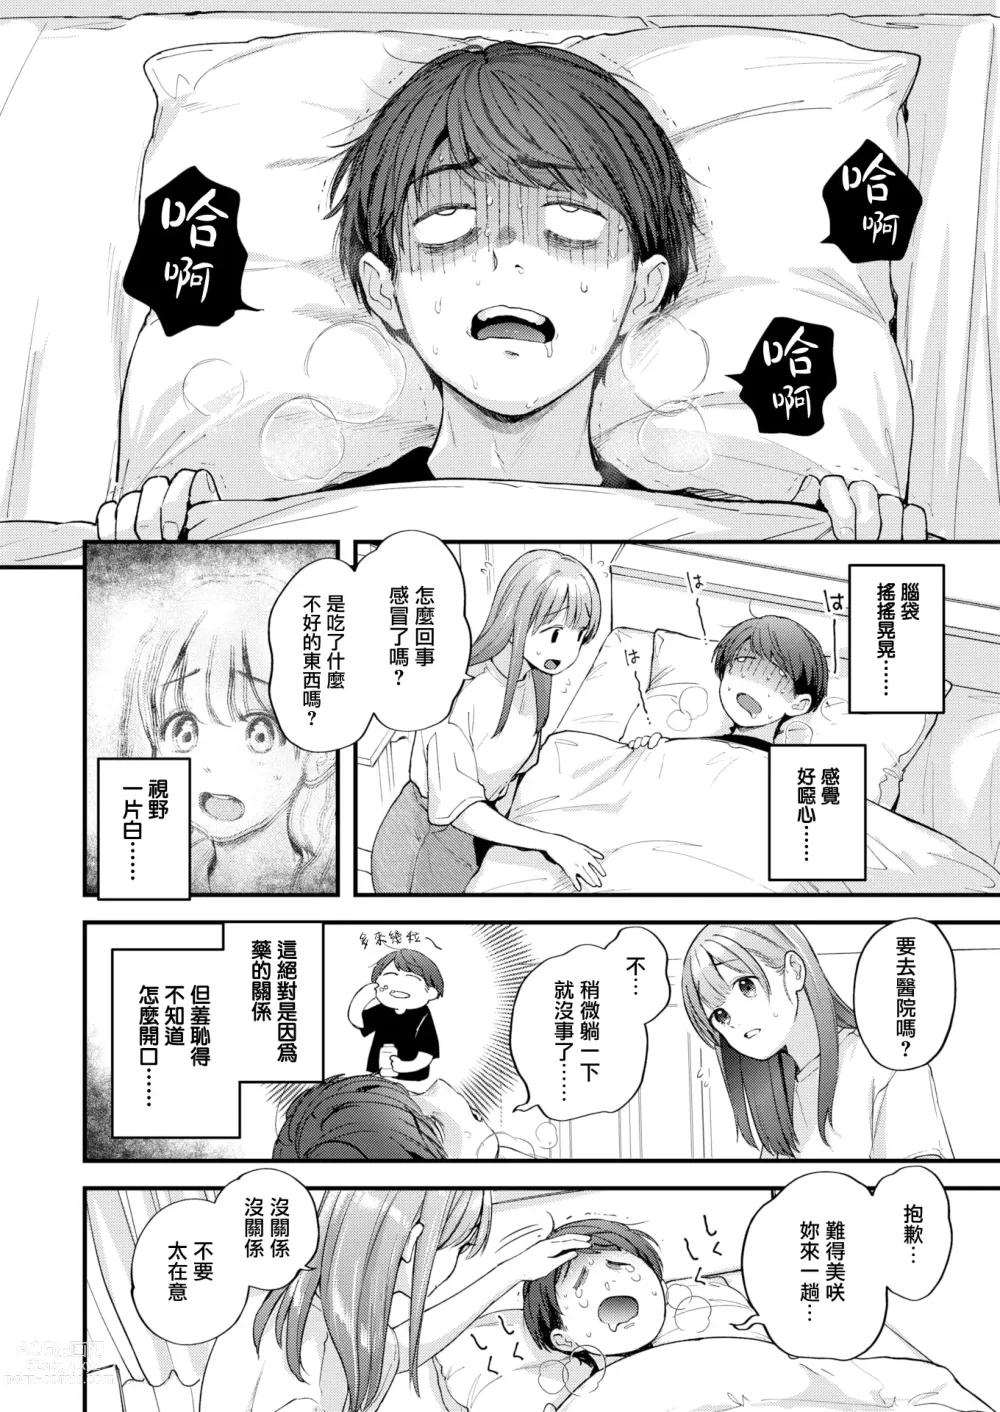 Page 6 of manga OVER x 3!!